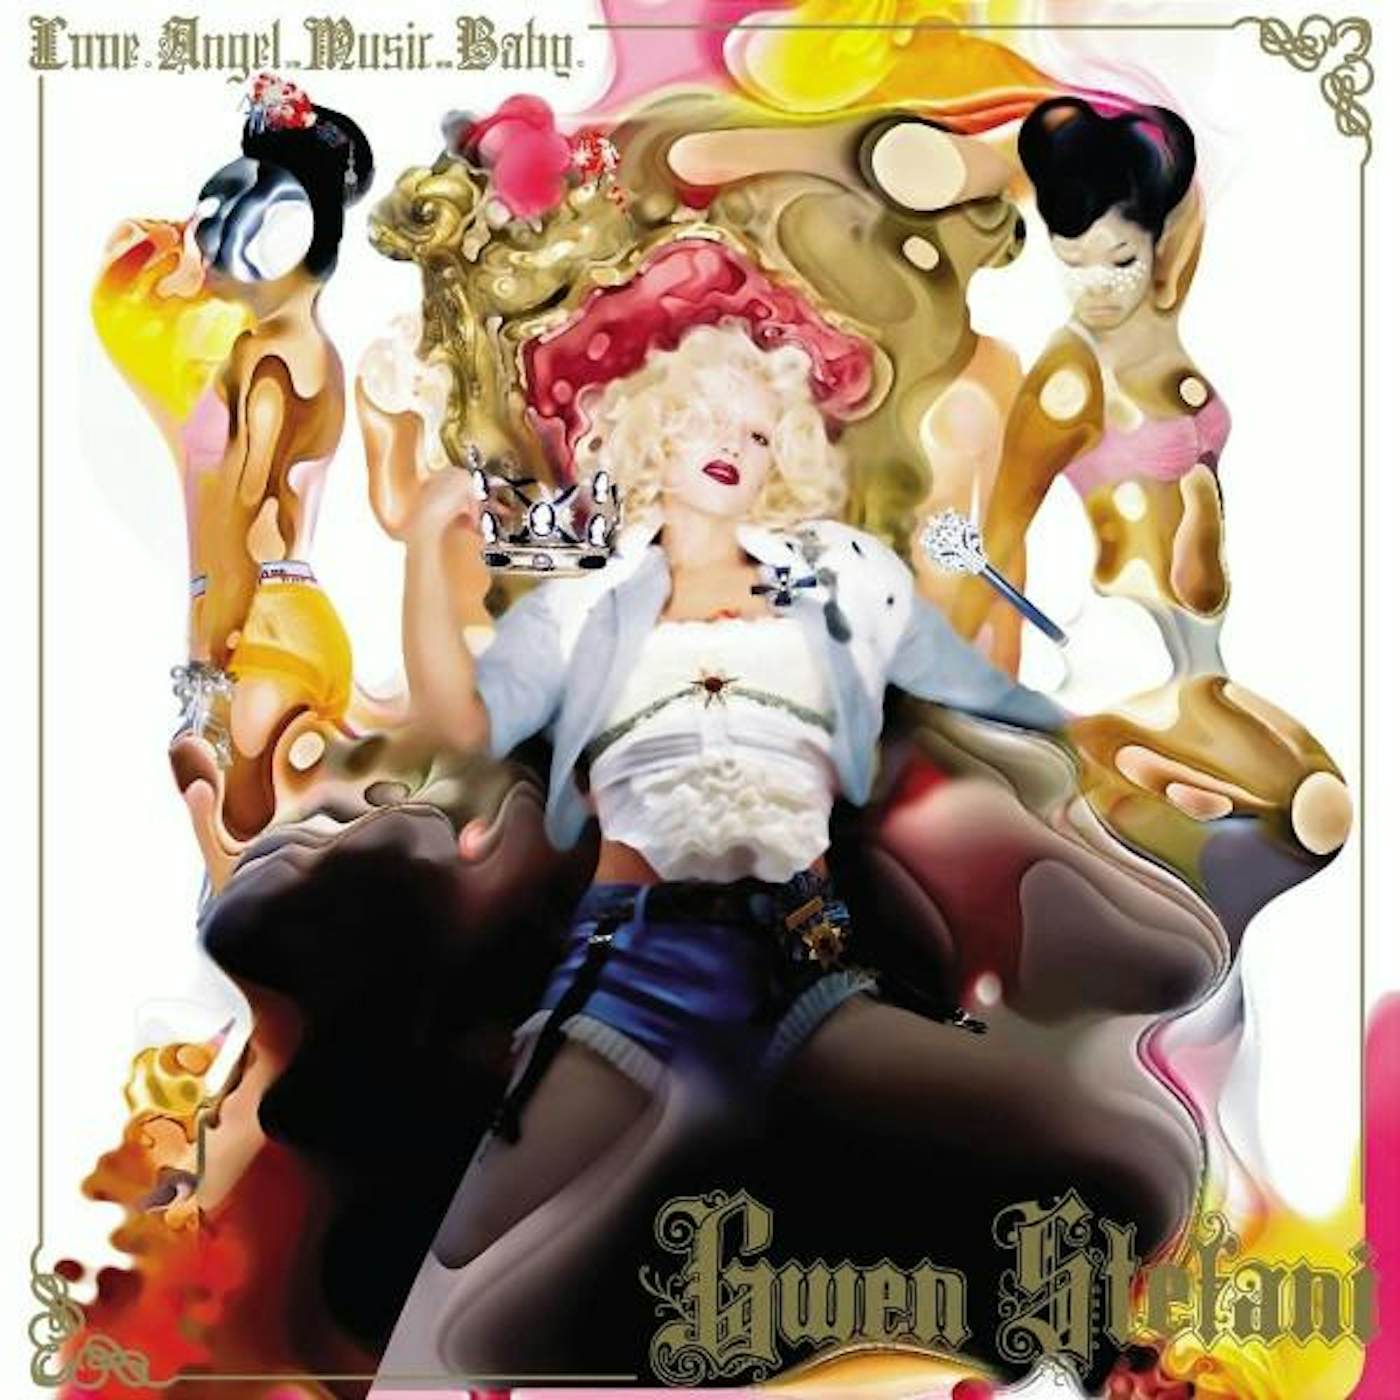 Gwen Stefani LOVE ANGEL MUSIC BABY CD